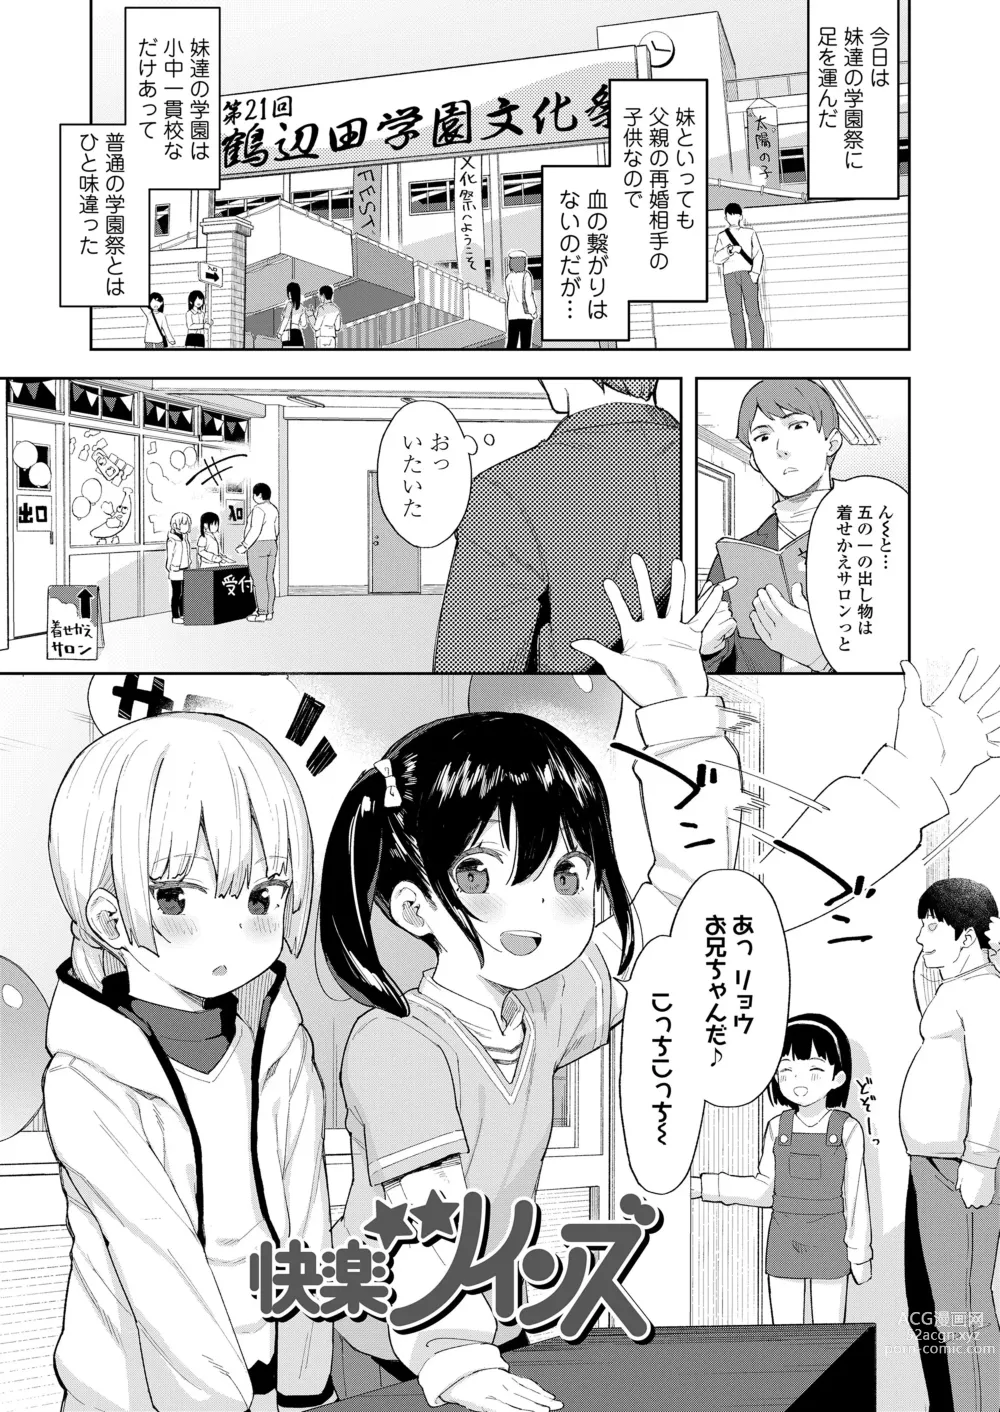 Page 3 of manga Koakuma-tachi ga Yattekita!